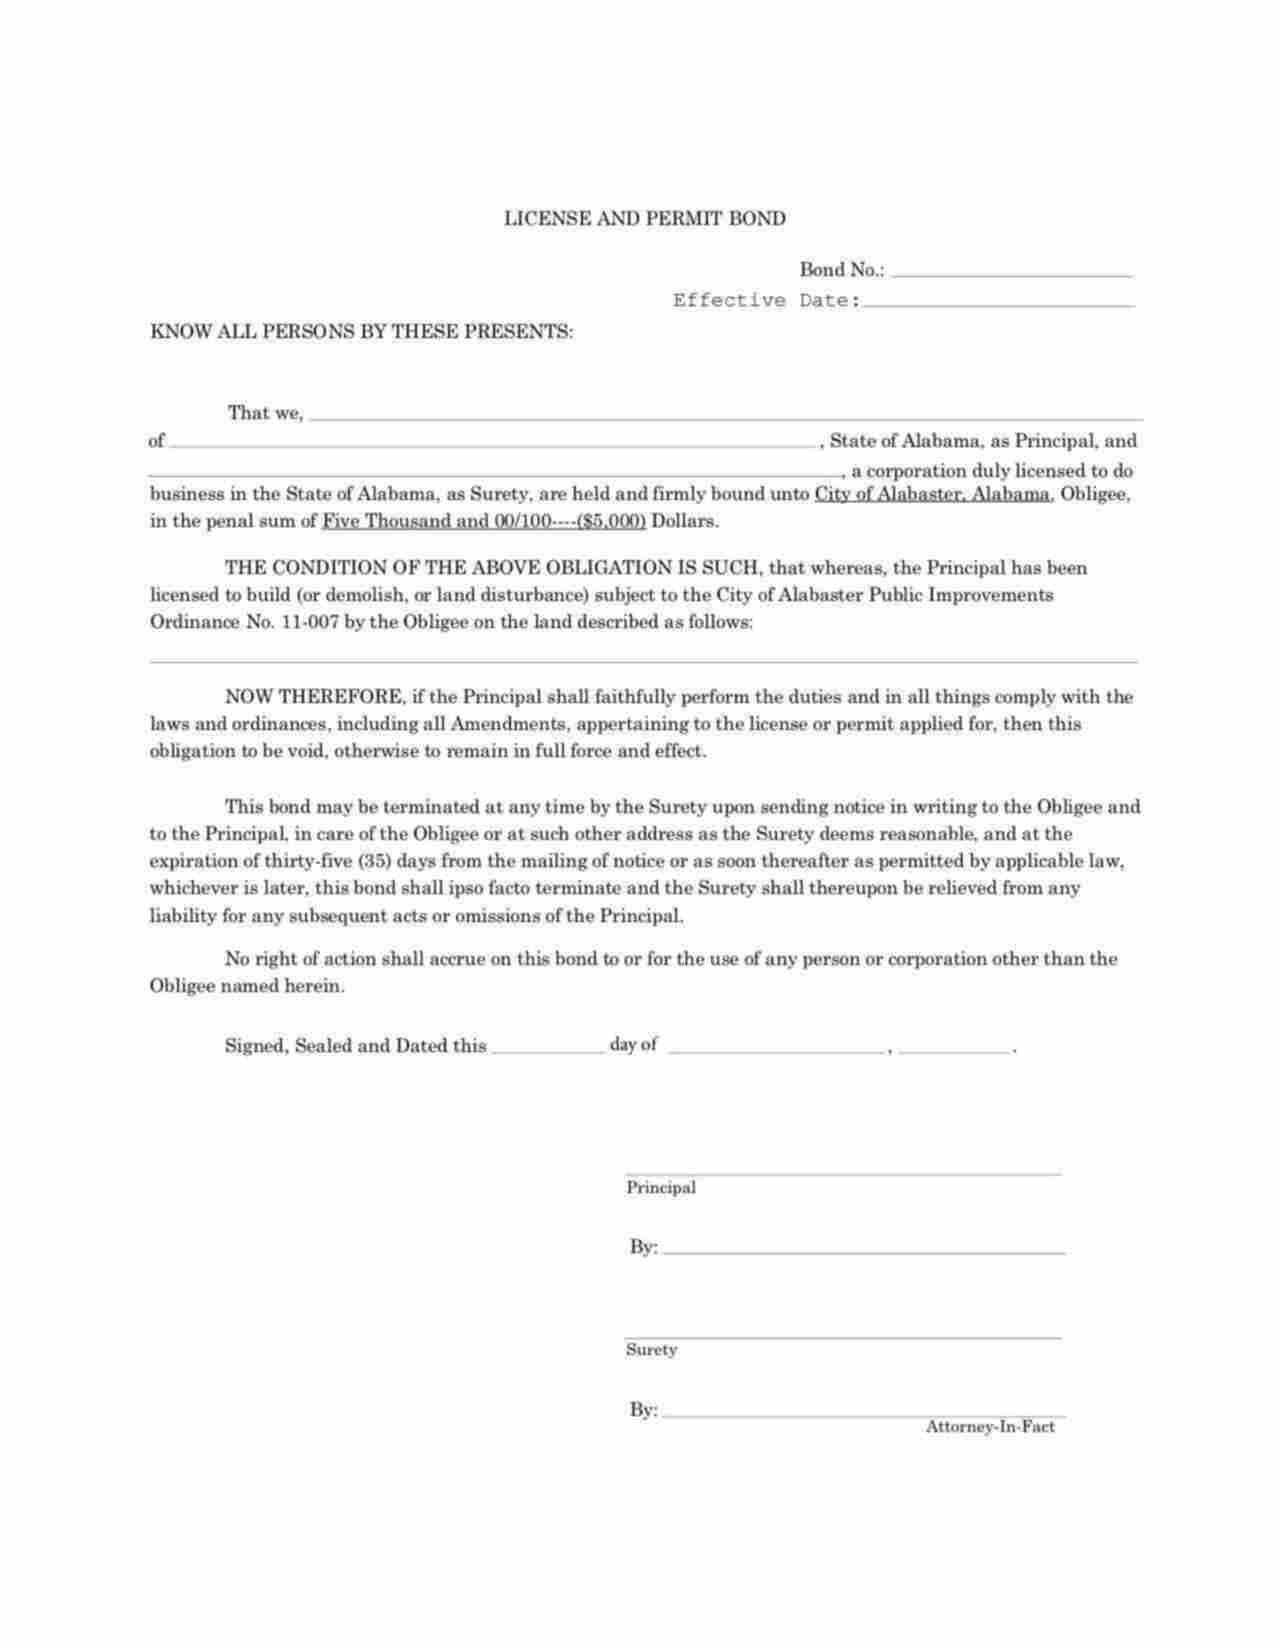 Alabama Public Improvements License and Permit Bond Form